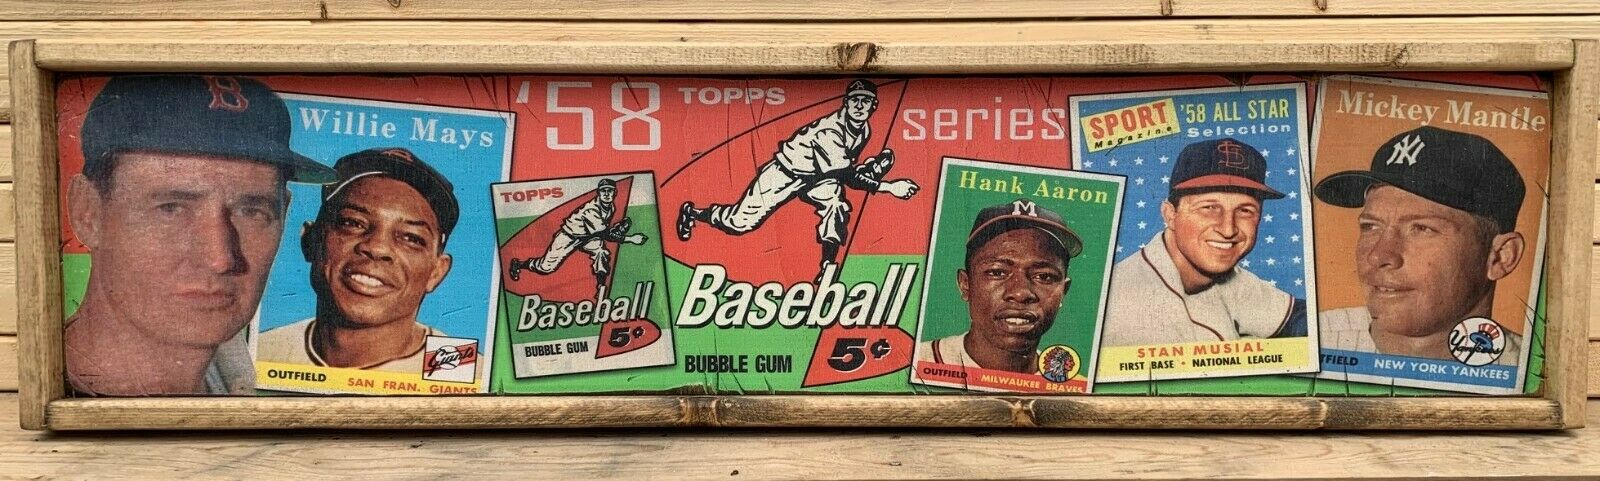 6x24 1958 Topps Baseball Vintage Style Wooden Baseball Card Advertising Sign